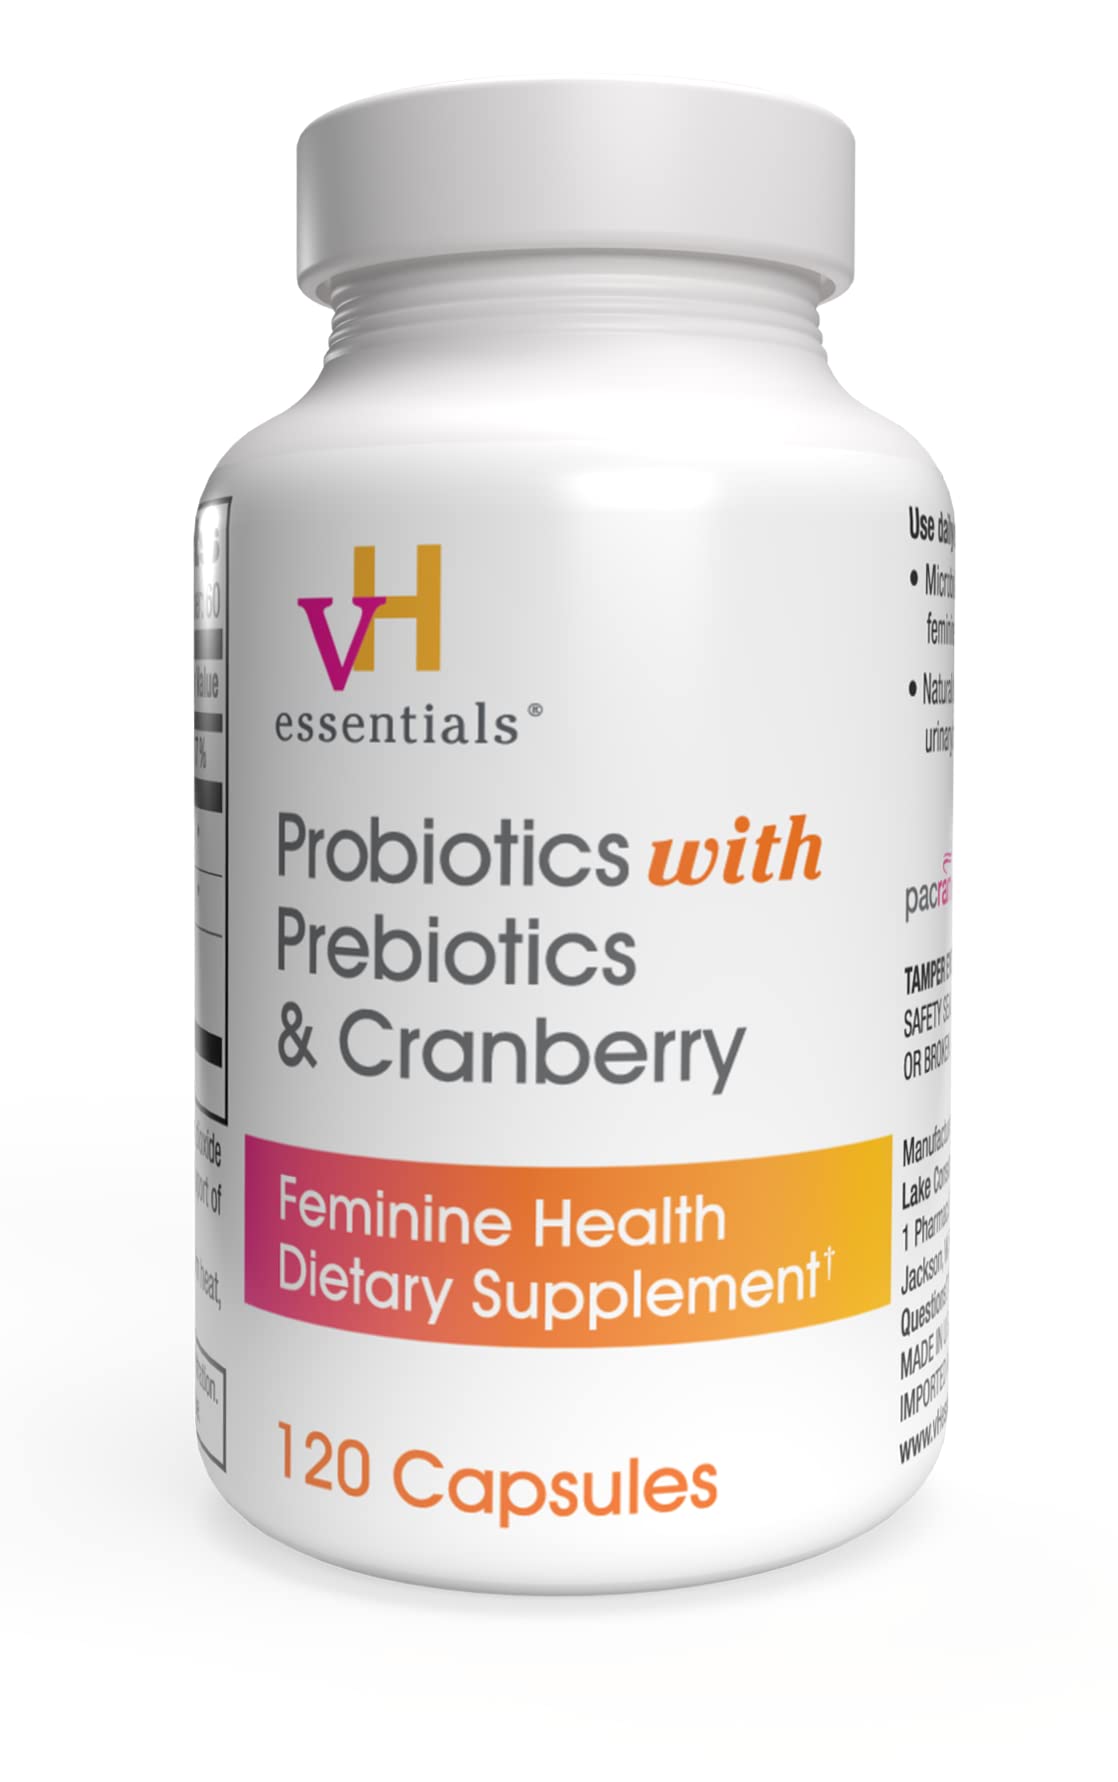 Vh Essentials Probiotics: The Ultimate Feminine Health Reviews